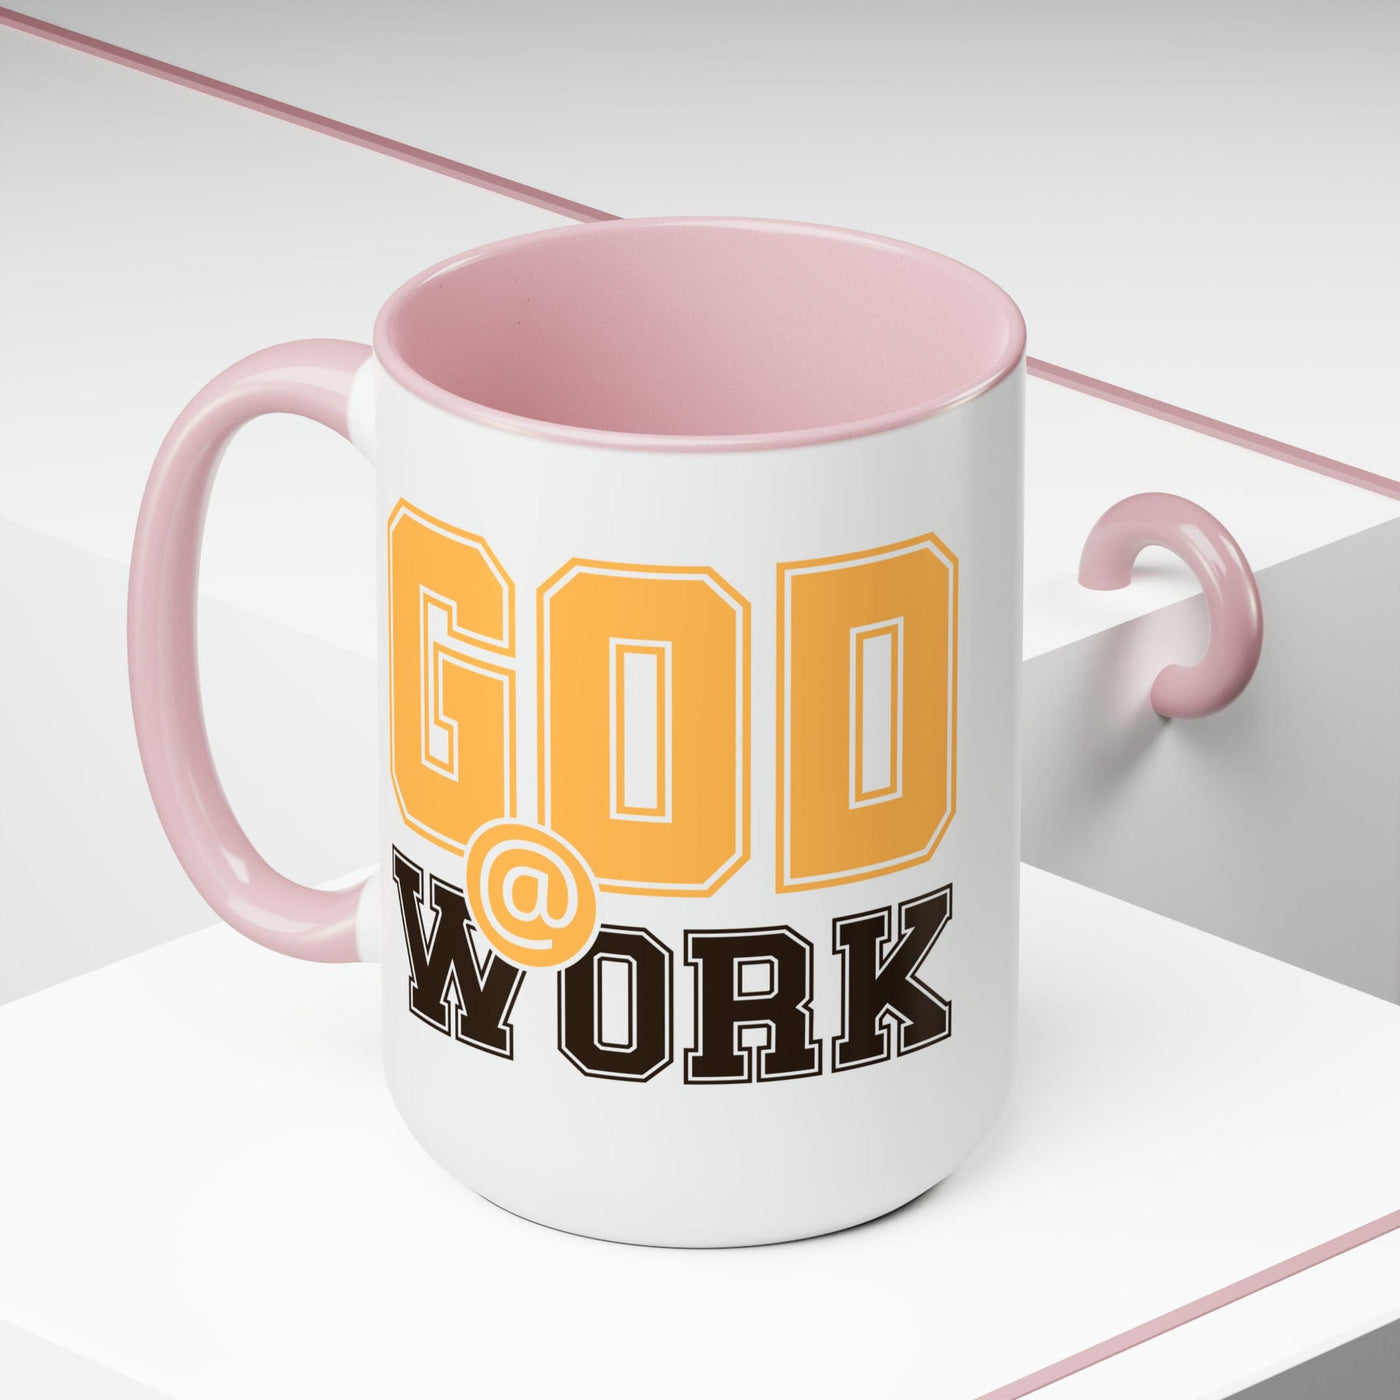 Accent Ceramic Coffee Mug 15oz - God @ Work Golden Yellow And Brown Print